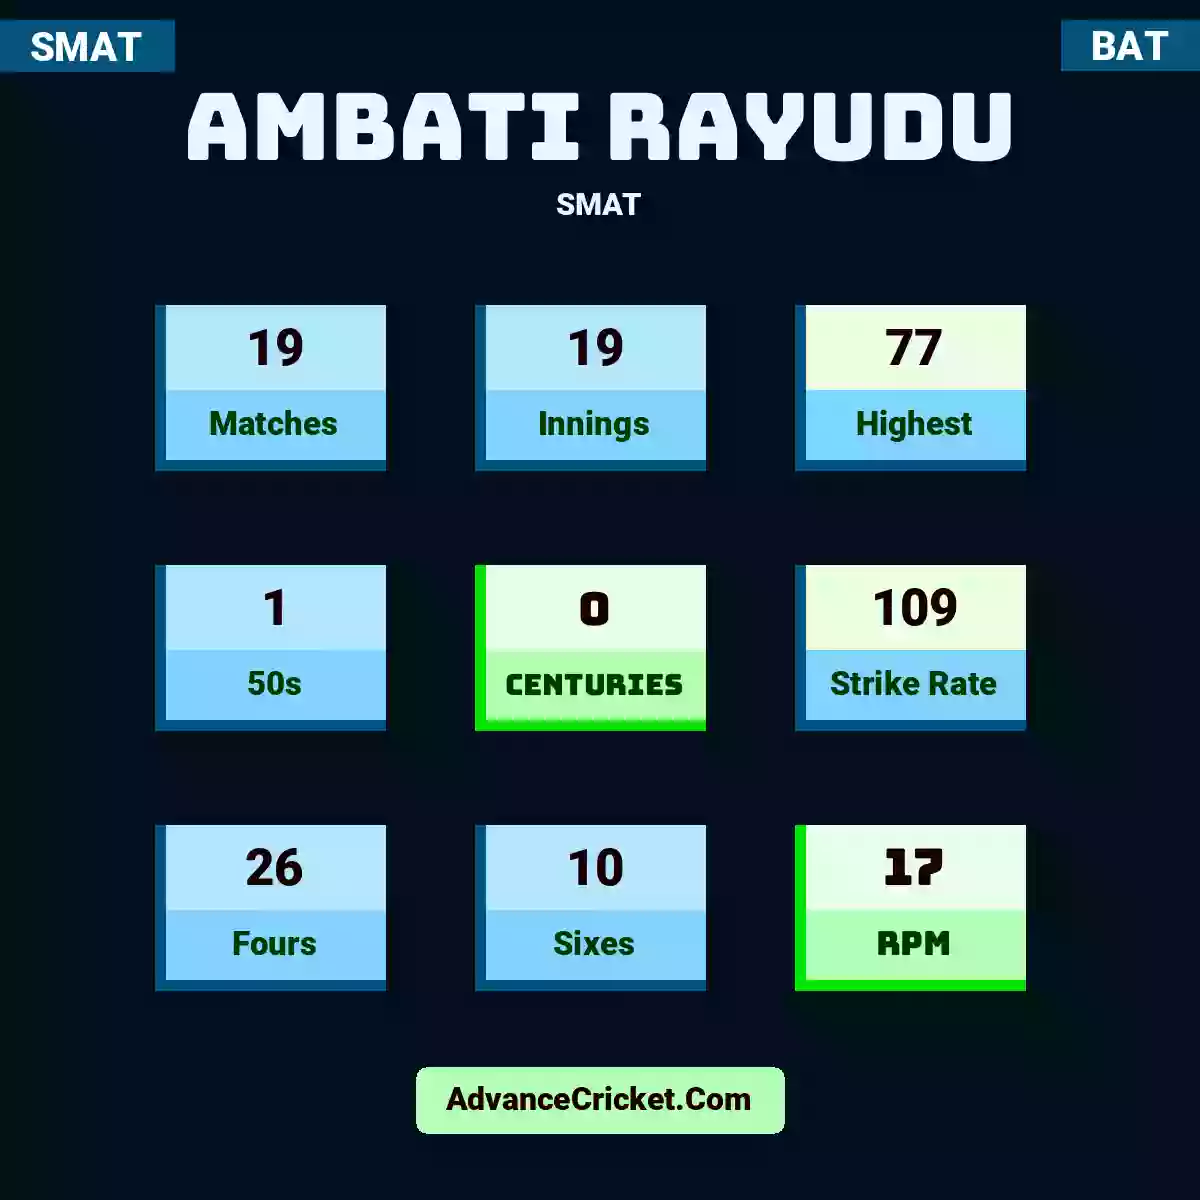 Ambati Rayudu SMAT , Ambati Rayudu played 19 matches, scored 77 runs as highest, 1 half-centuries, and 0 centuries, with a strike rate of 109. A.Rayudu hit 26 fours and 10 sixes, with an RPM of 17.